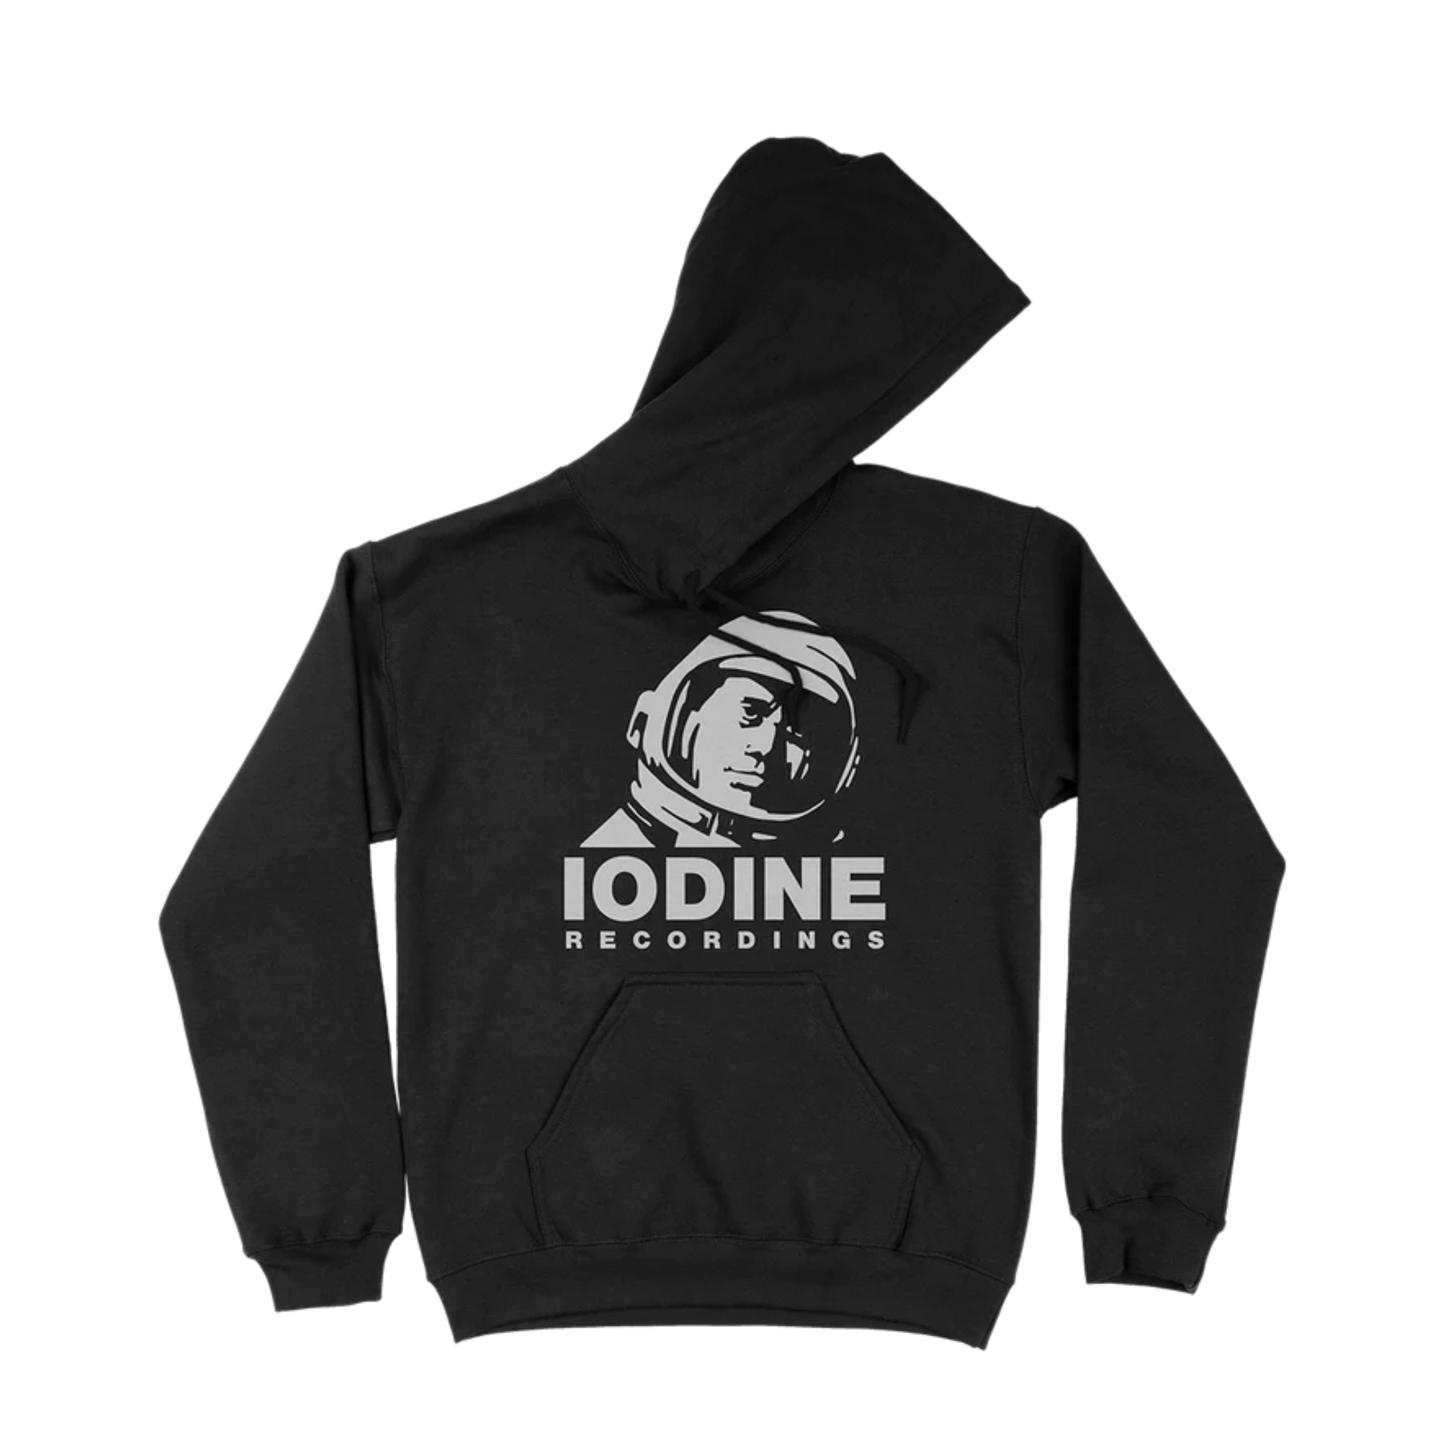 Iodine Recordings “Spaceman” Black Hooded Sweatshirt